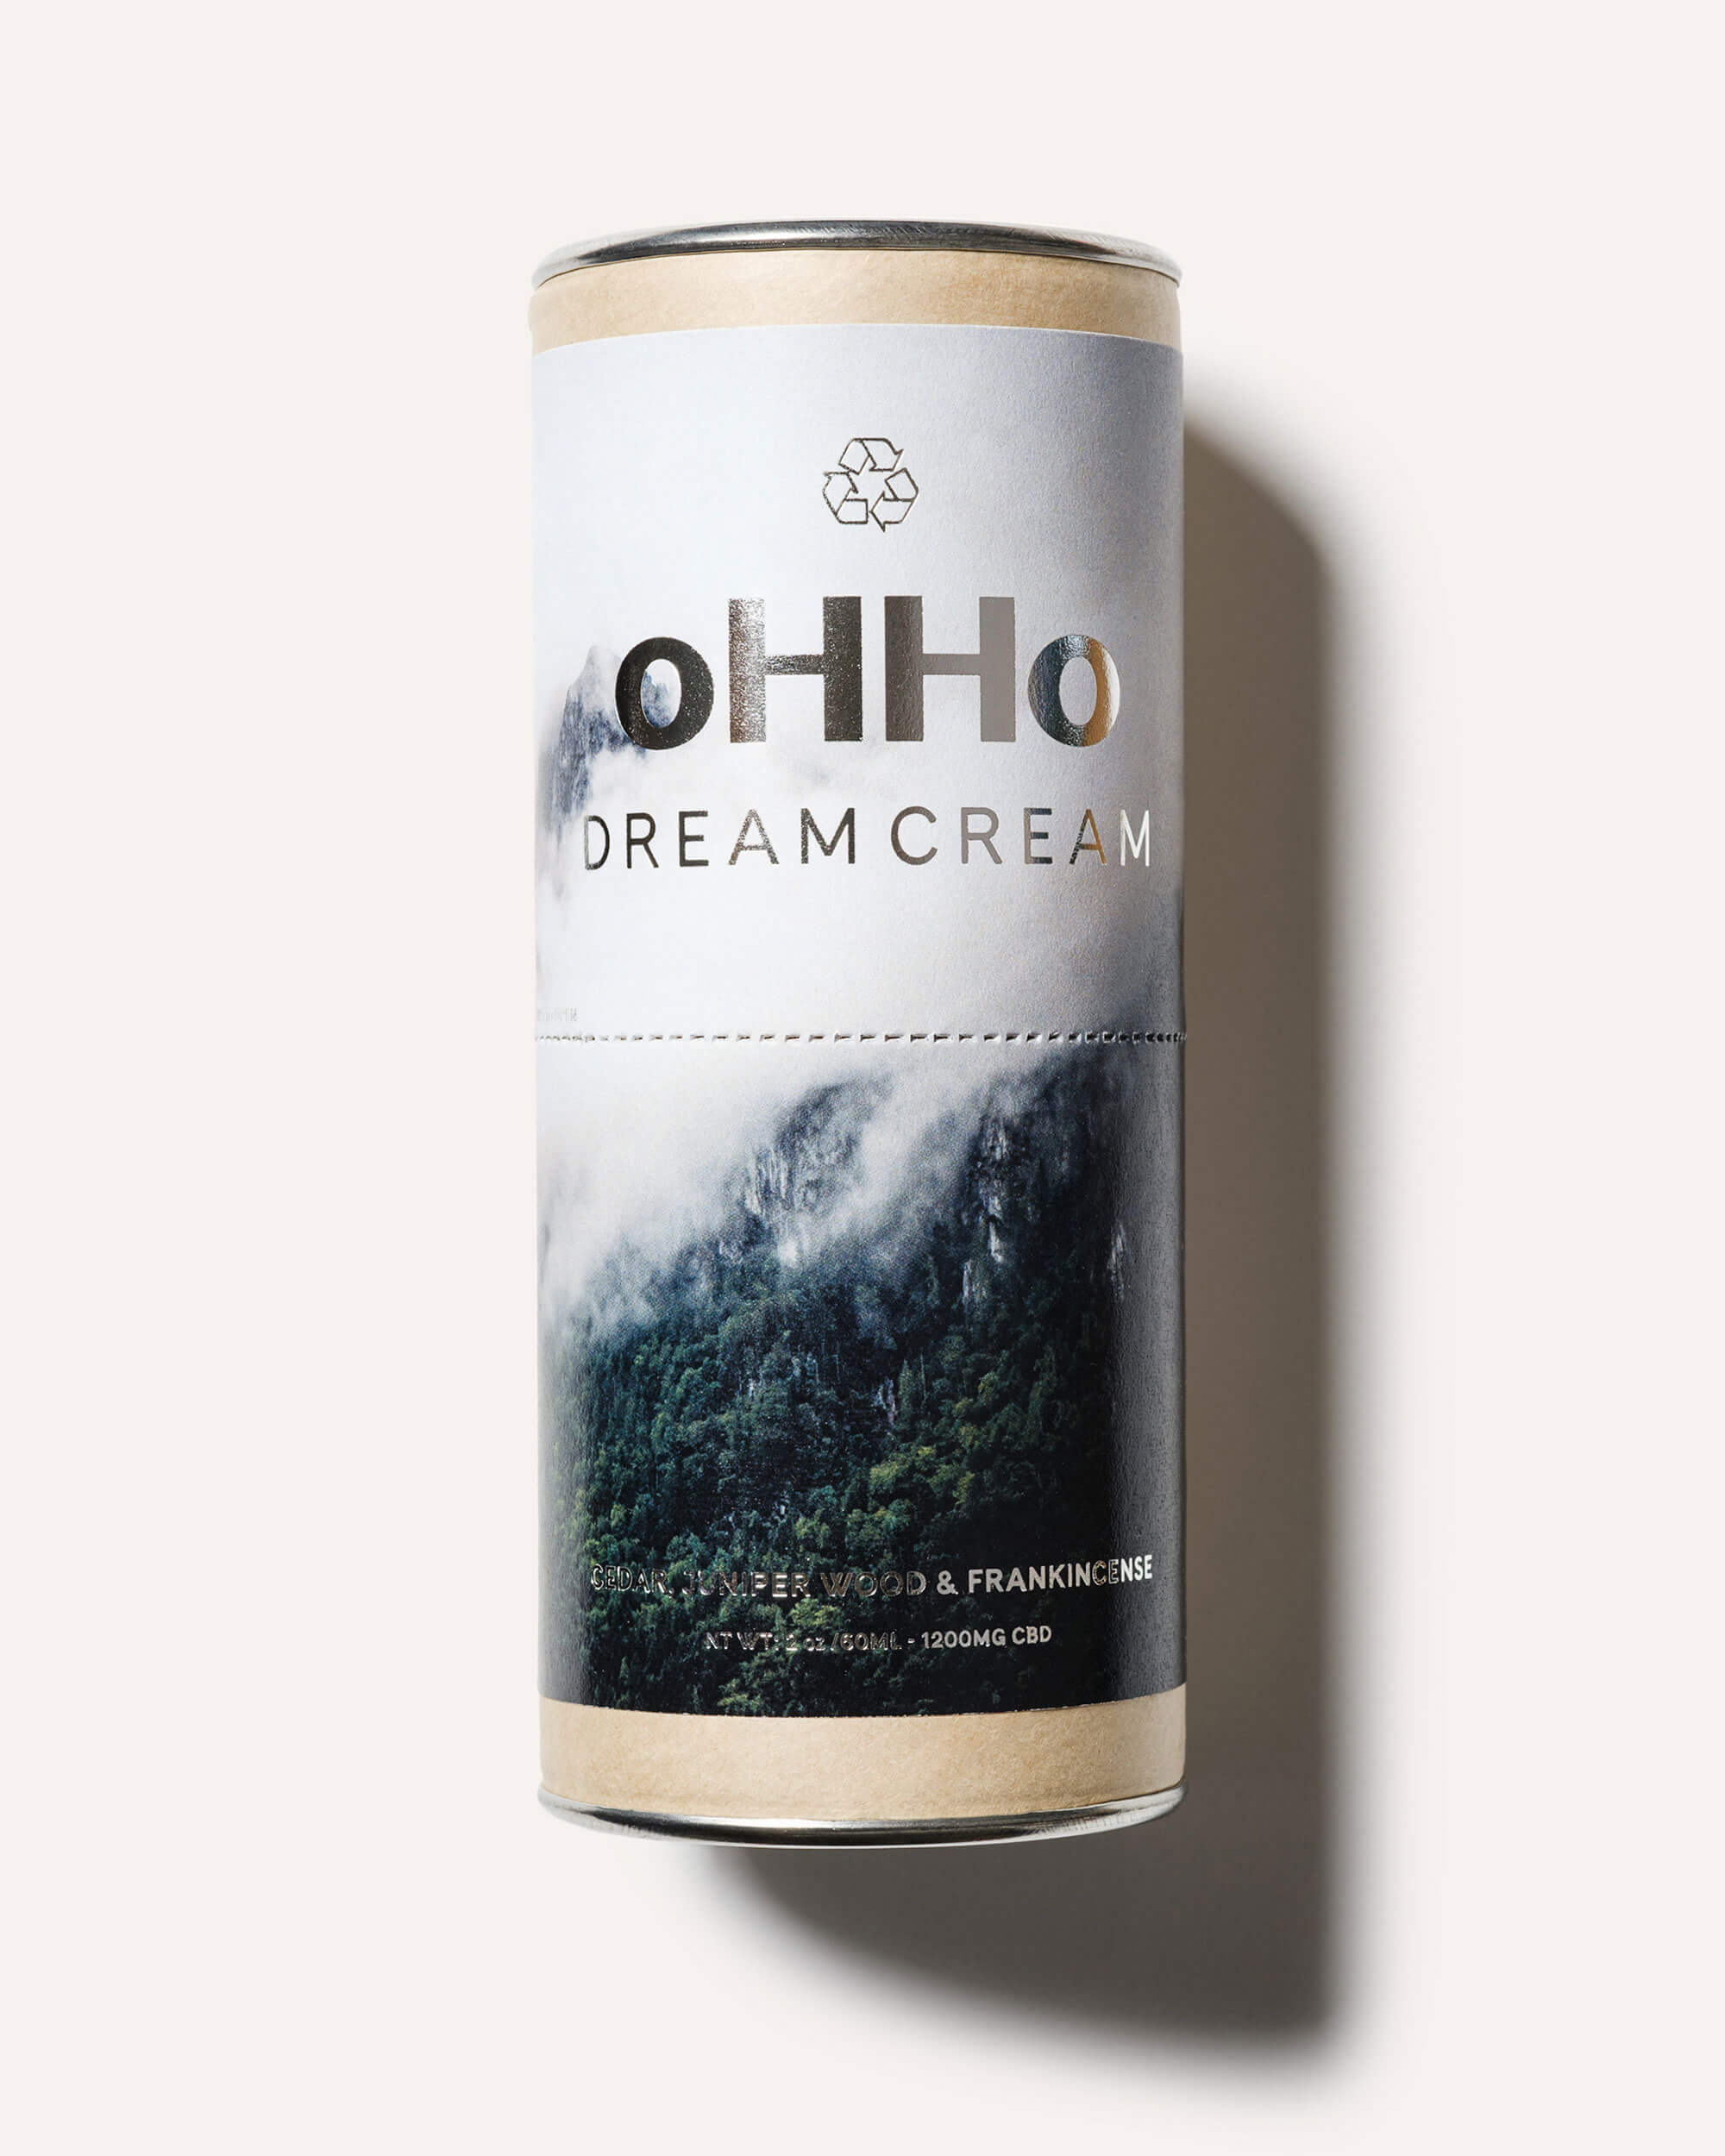 Green Forest Dream Cream packaging